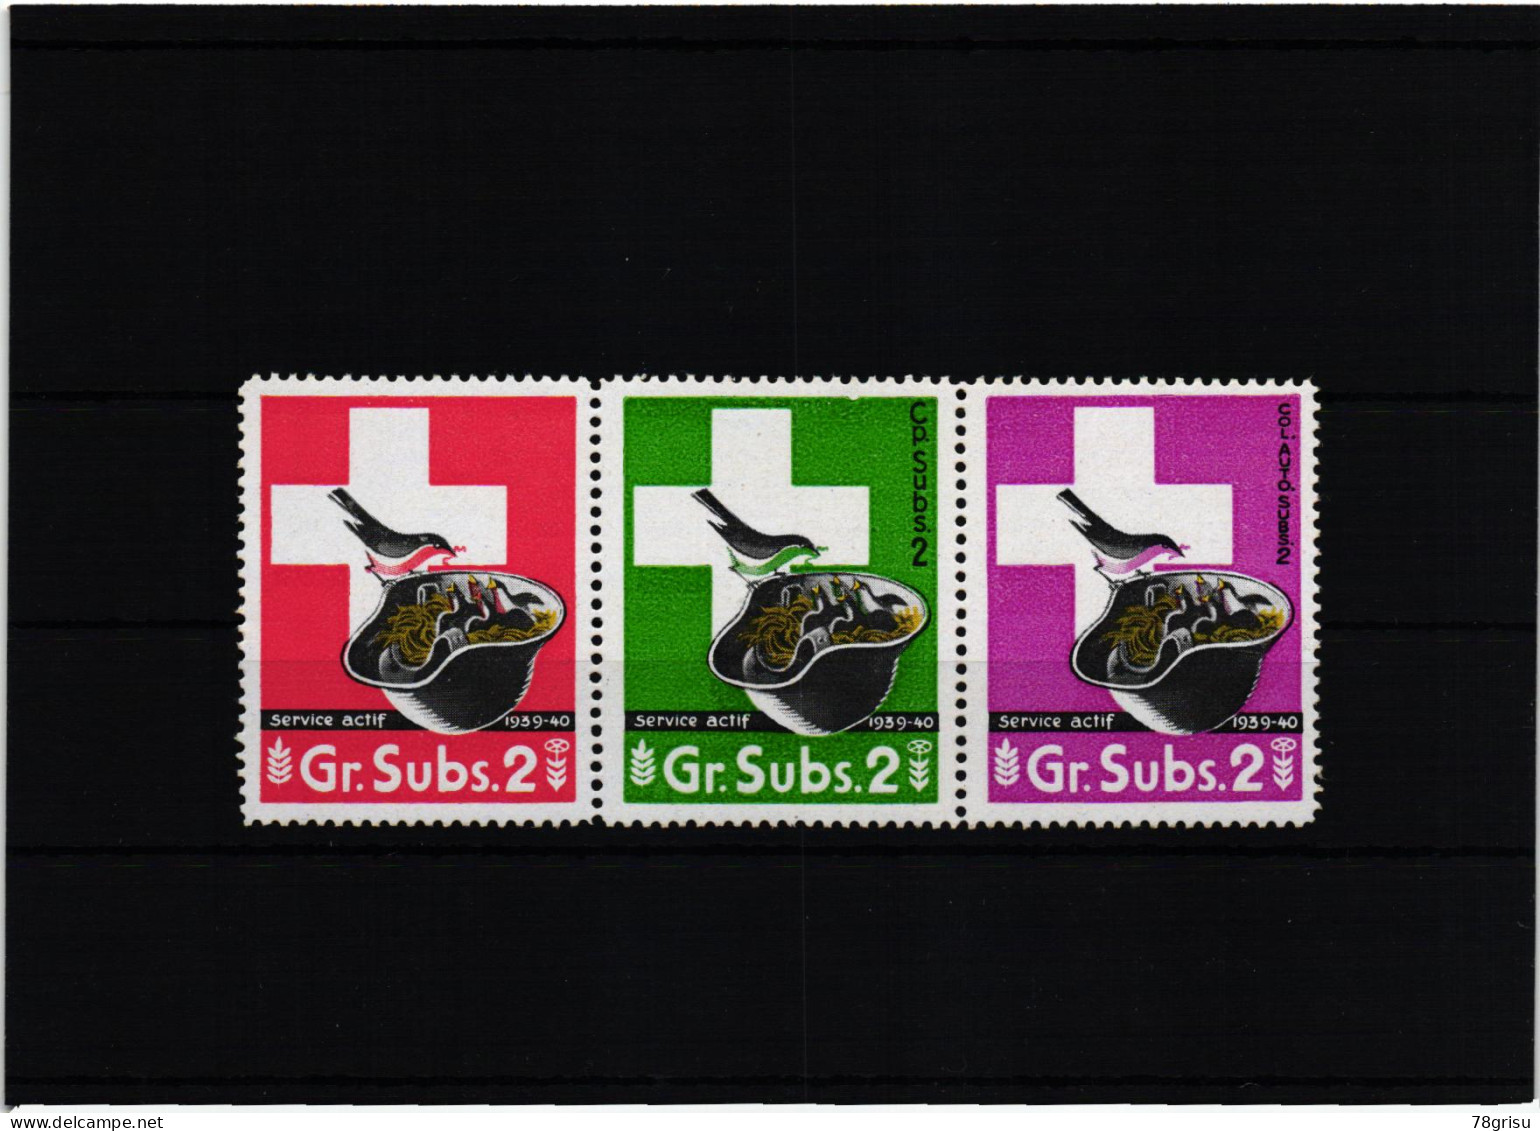 Schweiz Soldatenmarken, GR.Subs. Cp.Subs. Col.Auto.Subs. 1939-40 - Labels